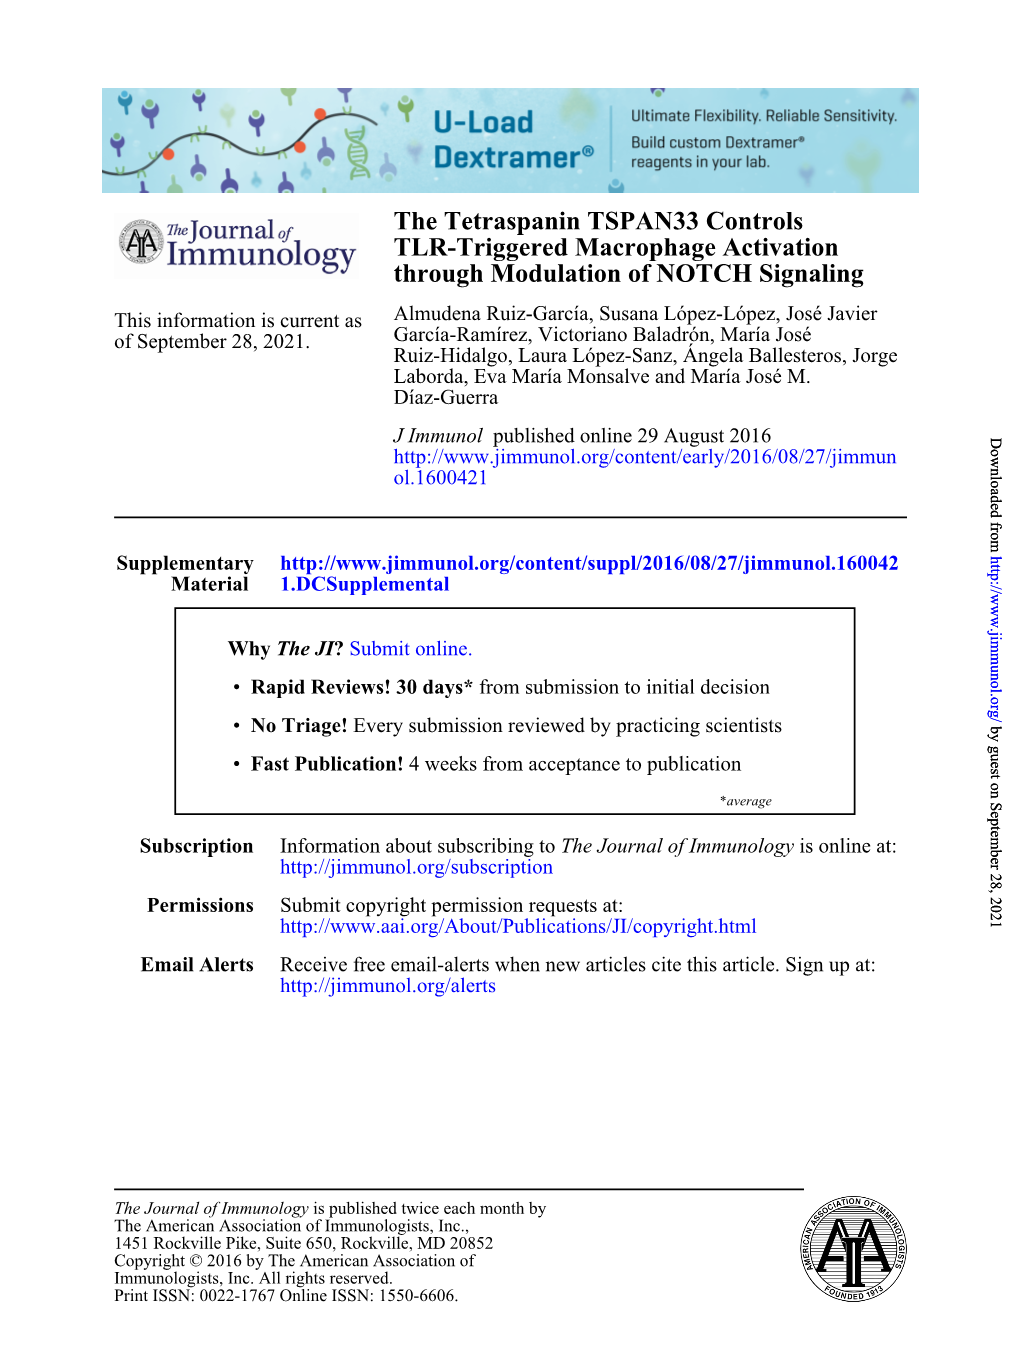 The Tetraspanin TSPAN33 Controls TLR-Triggered Macrophage Activation Through Modulation of NOTCH Signaling